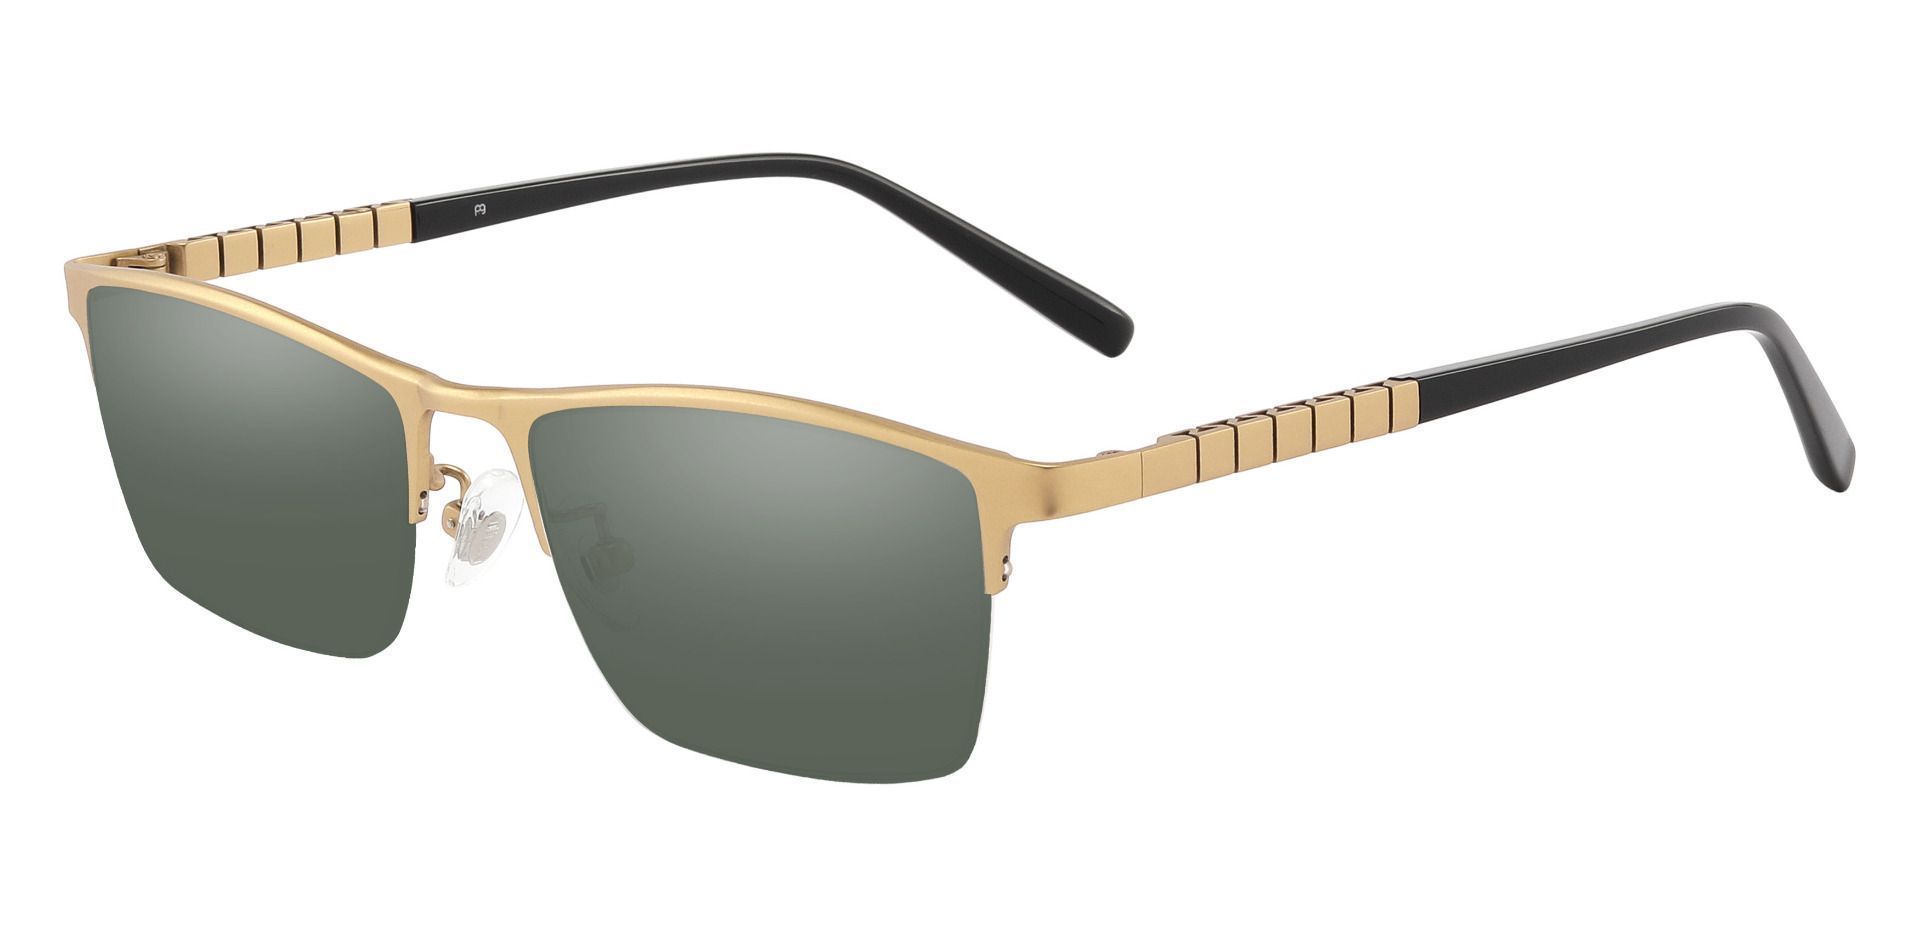 Maine Rectangle Prescription Sunglasses - Gold Frame With Green Lenses